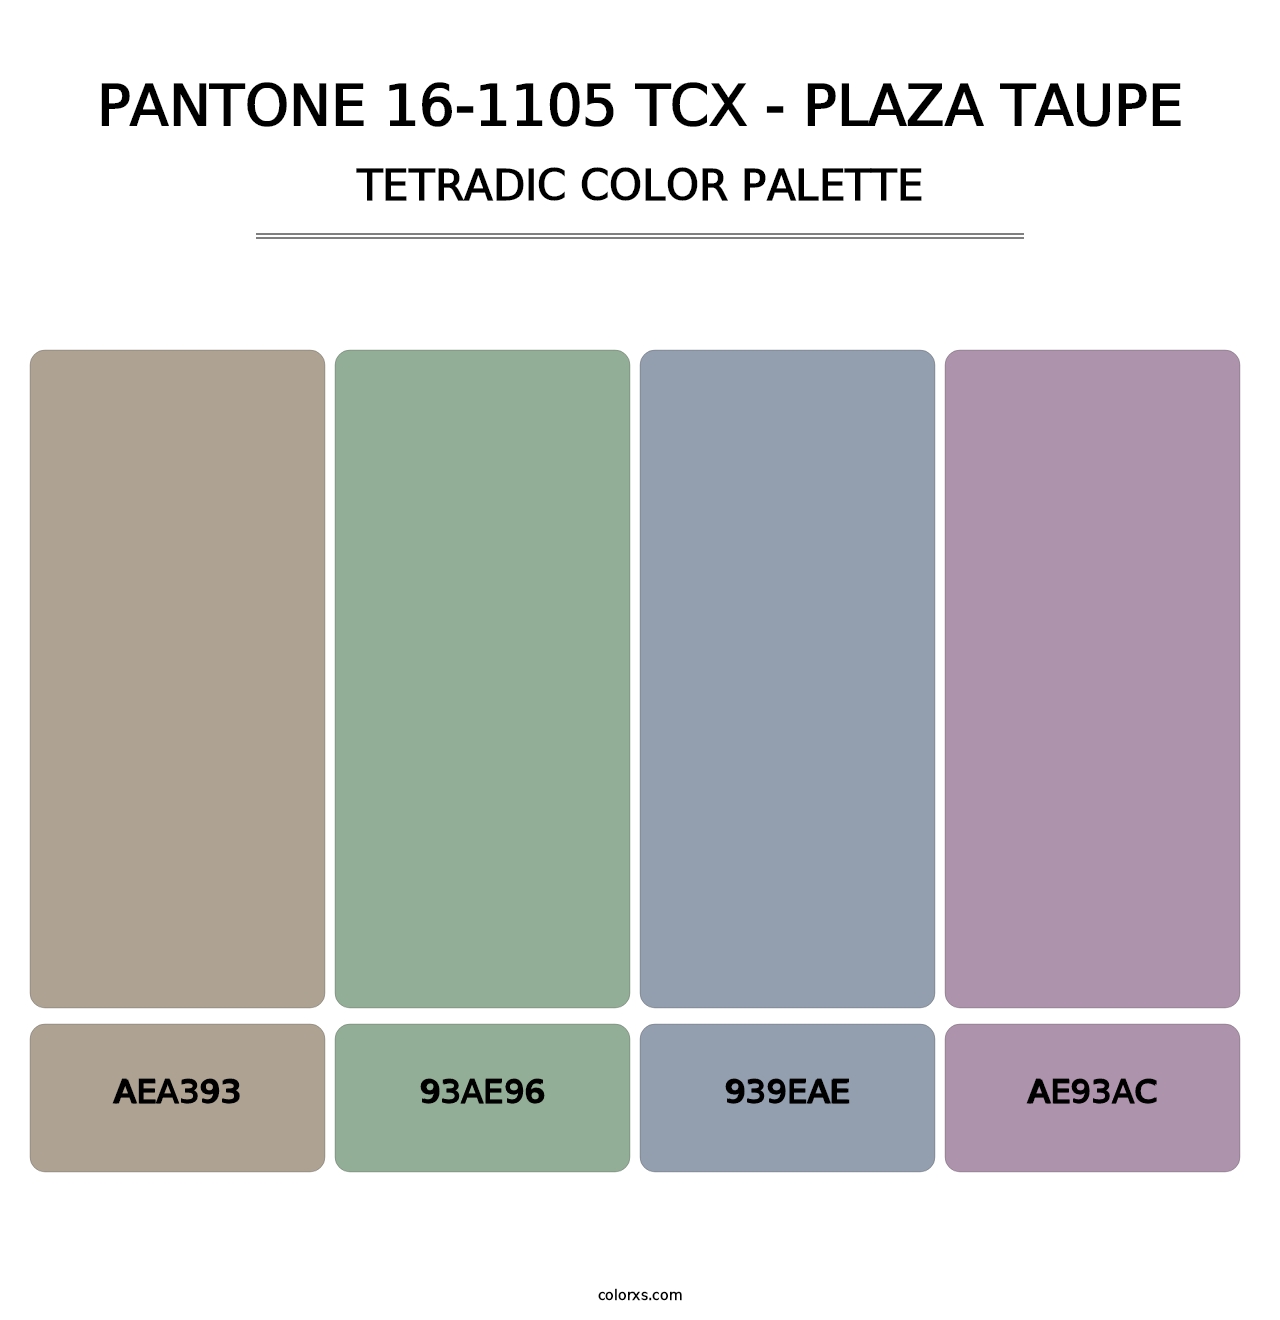 PANTONE 16-1105 TCX - Plaza Taupe - Tetradic Color Palette